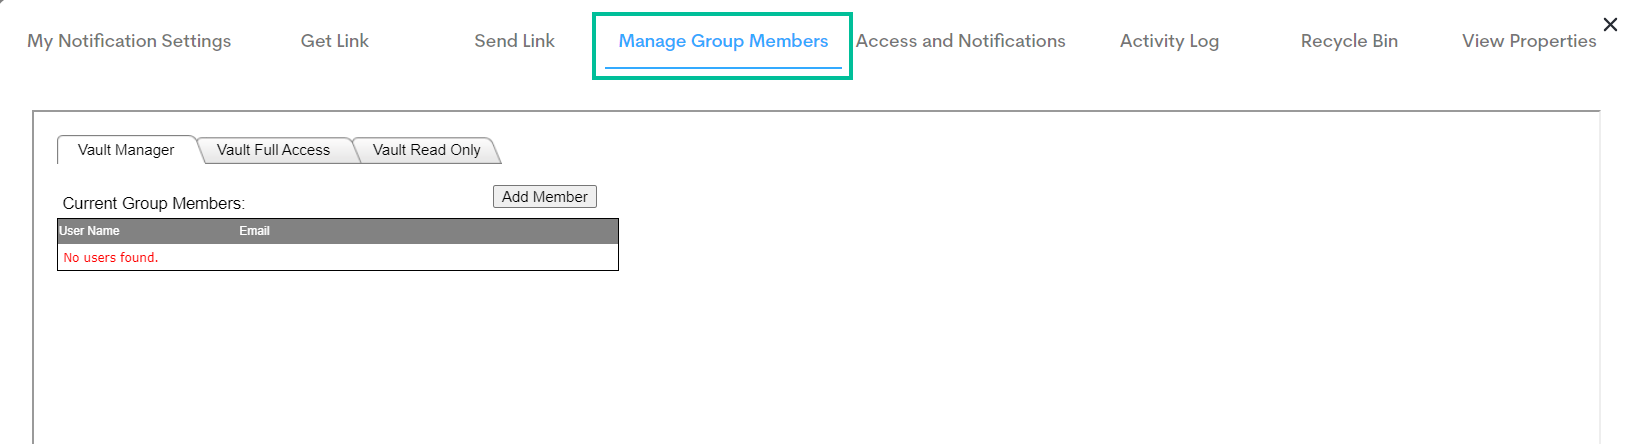 FF - Vault properties manage group members+.png